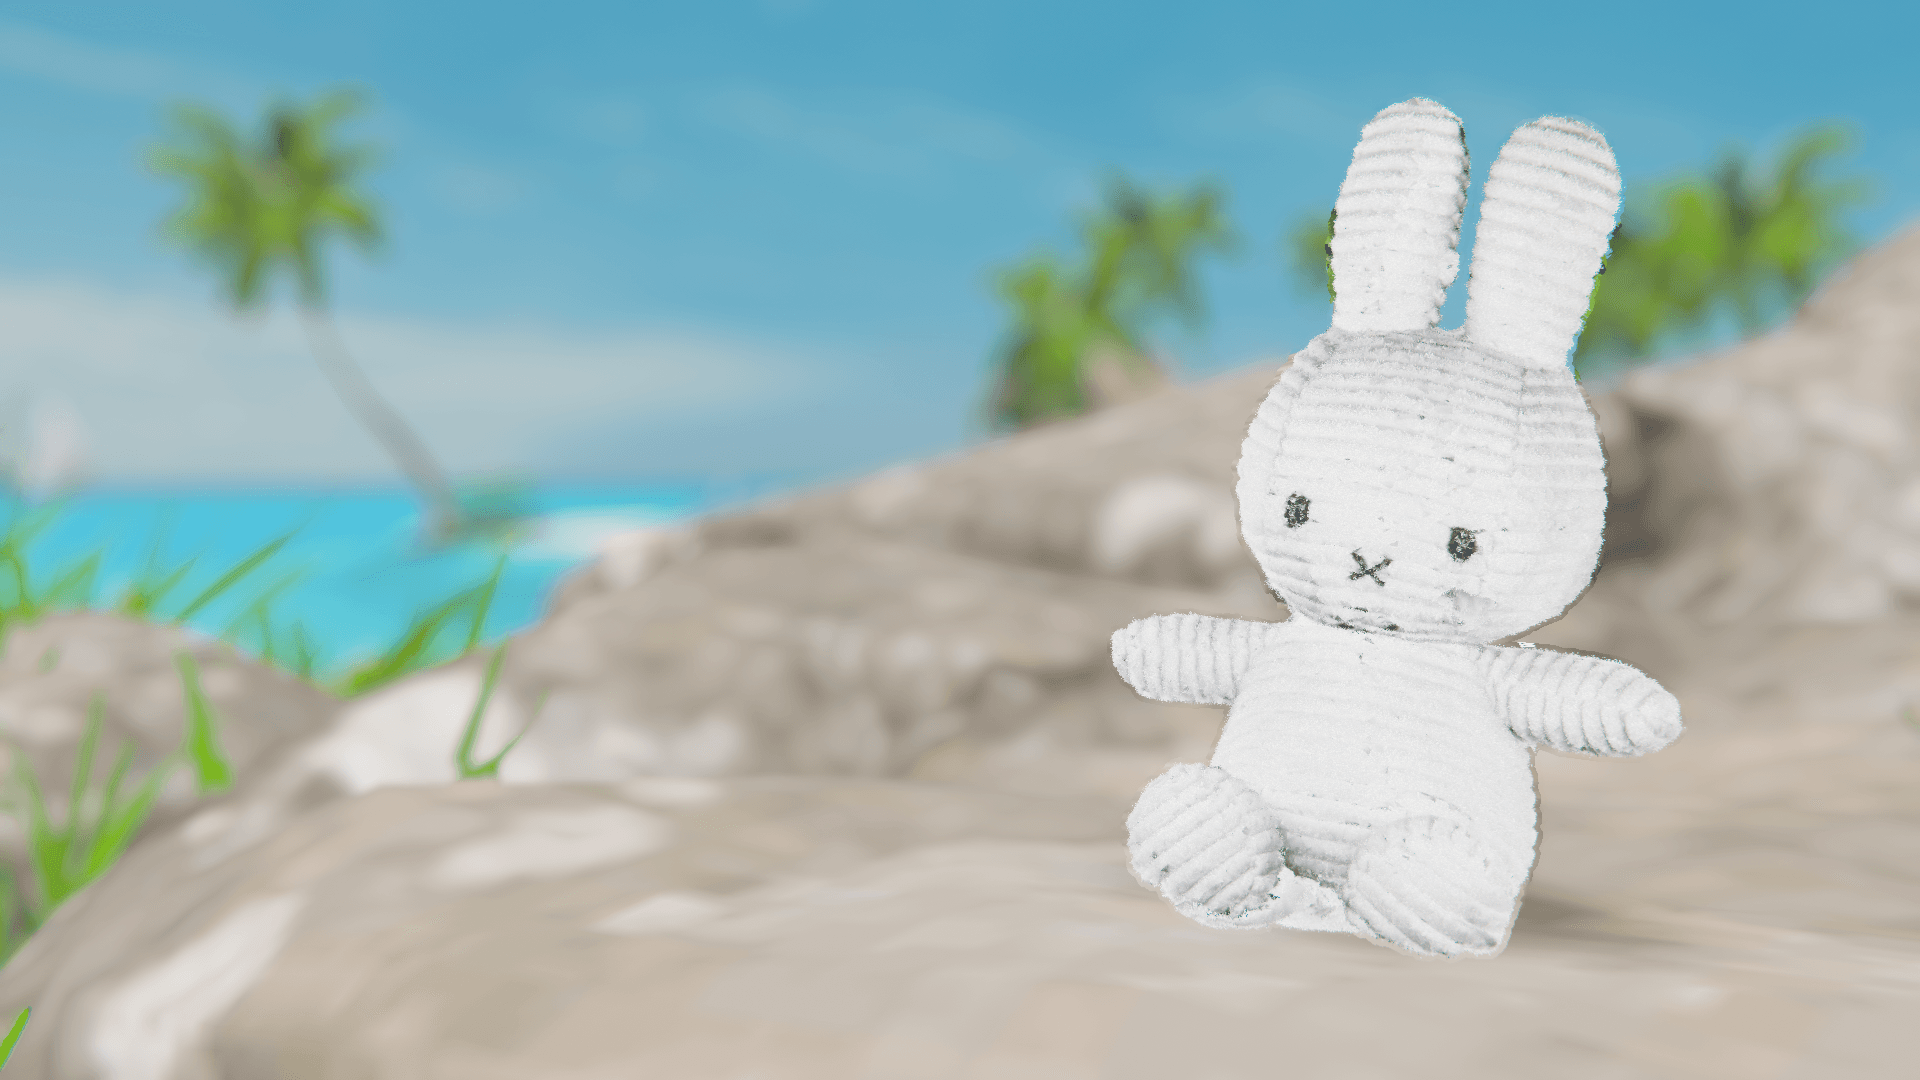 dahyeon bunny 2 dec - final.glb 3d model